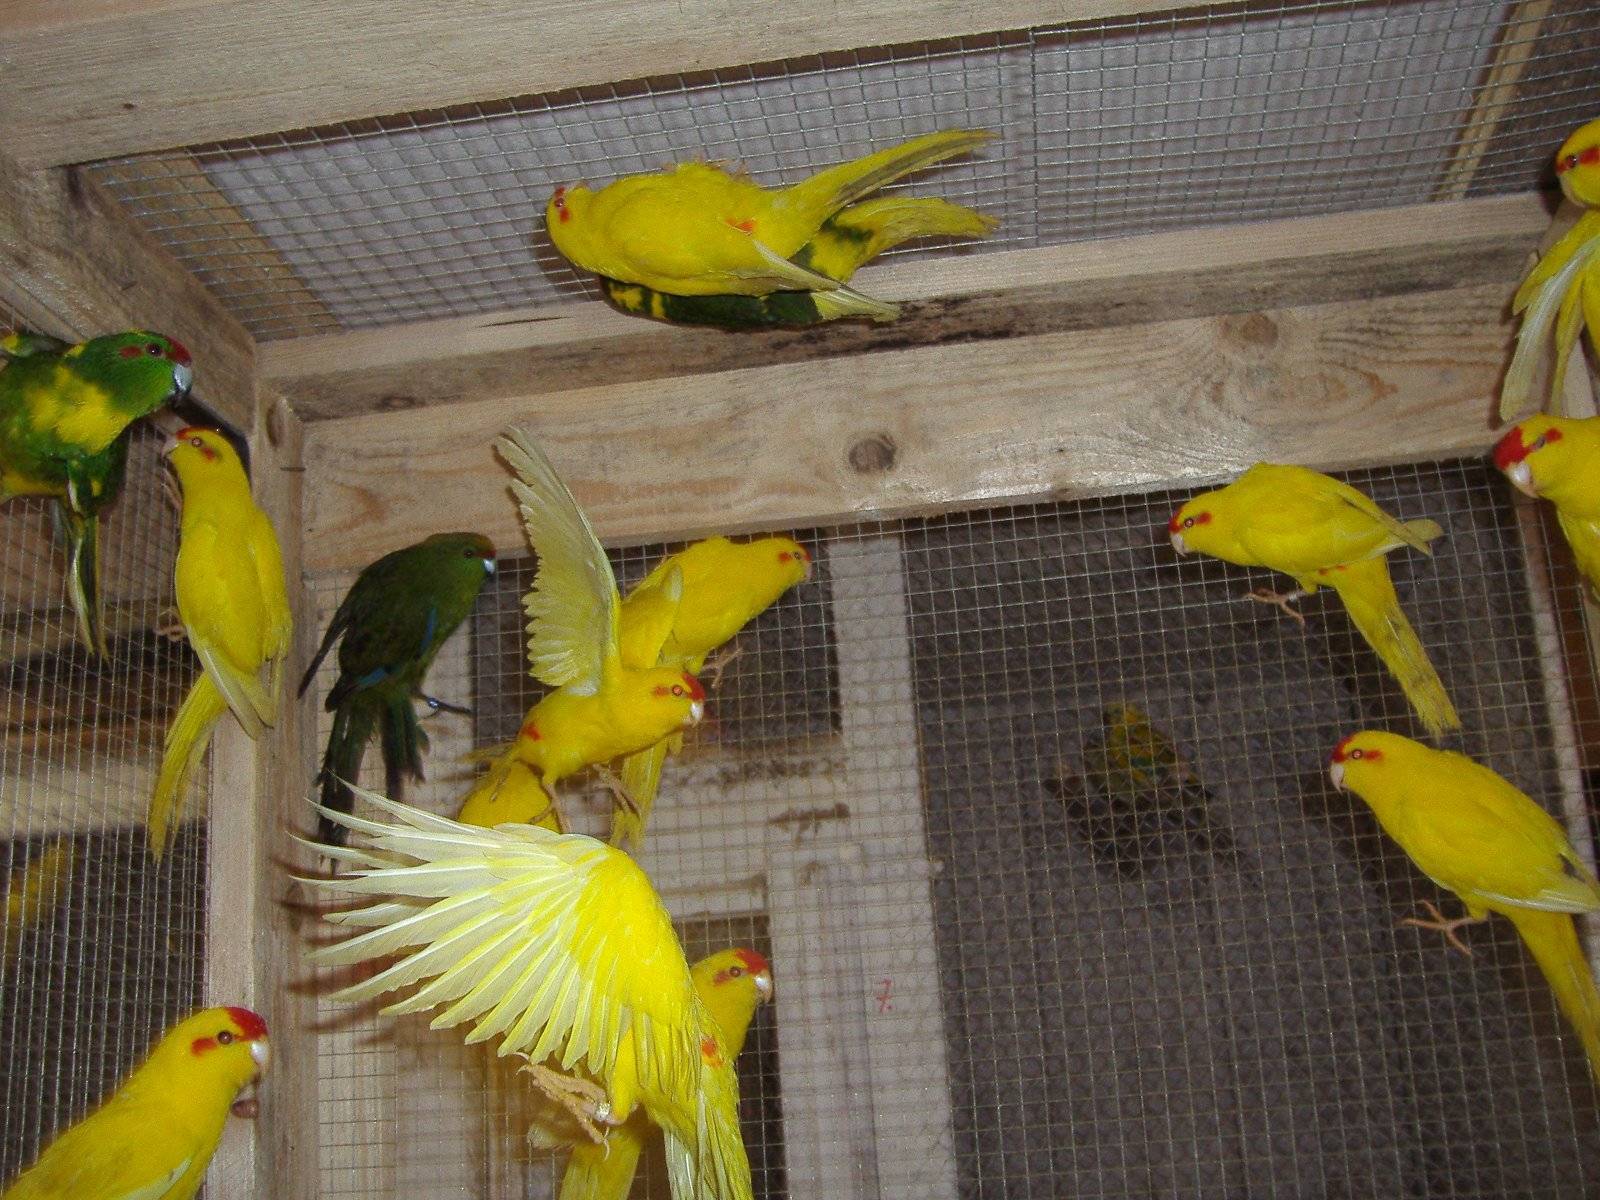 Какарики (прыгающие попугаи) : фото, описание, содержание wikipet.ru